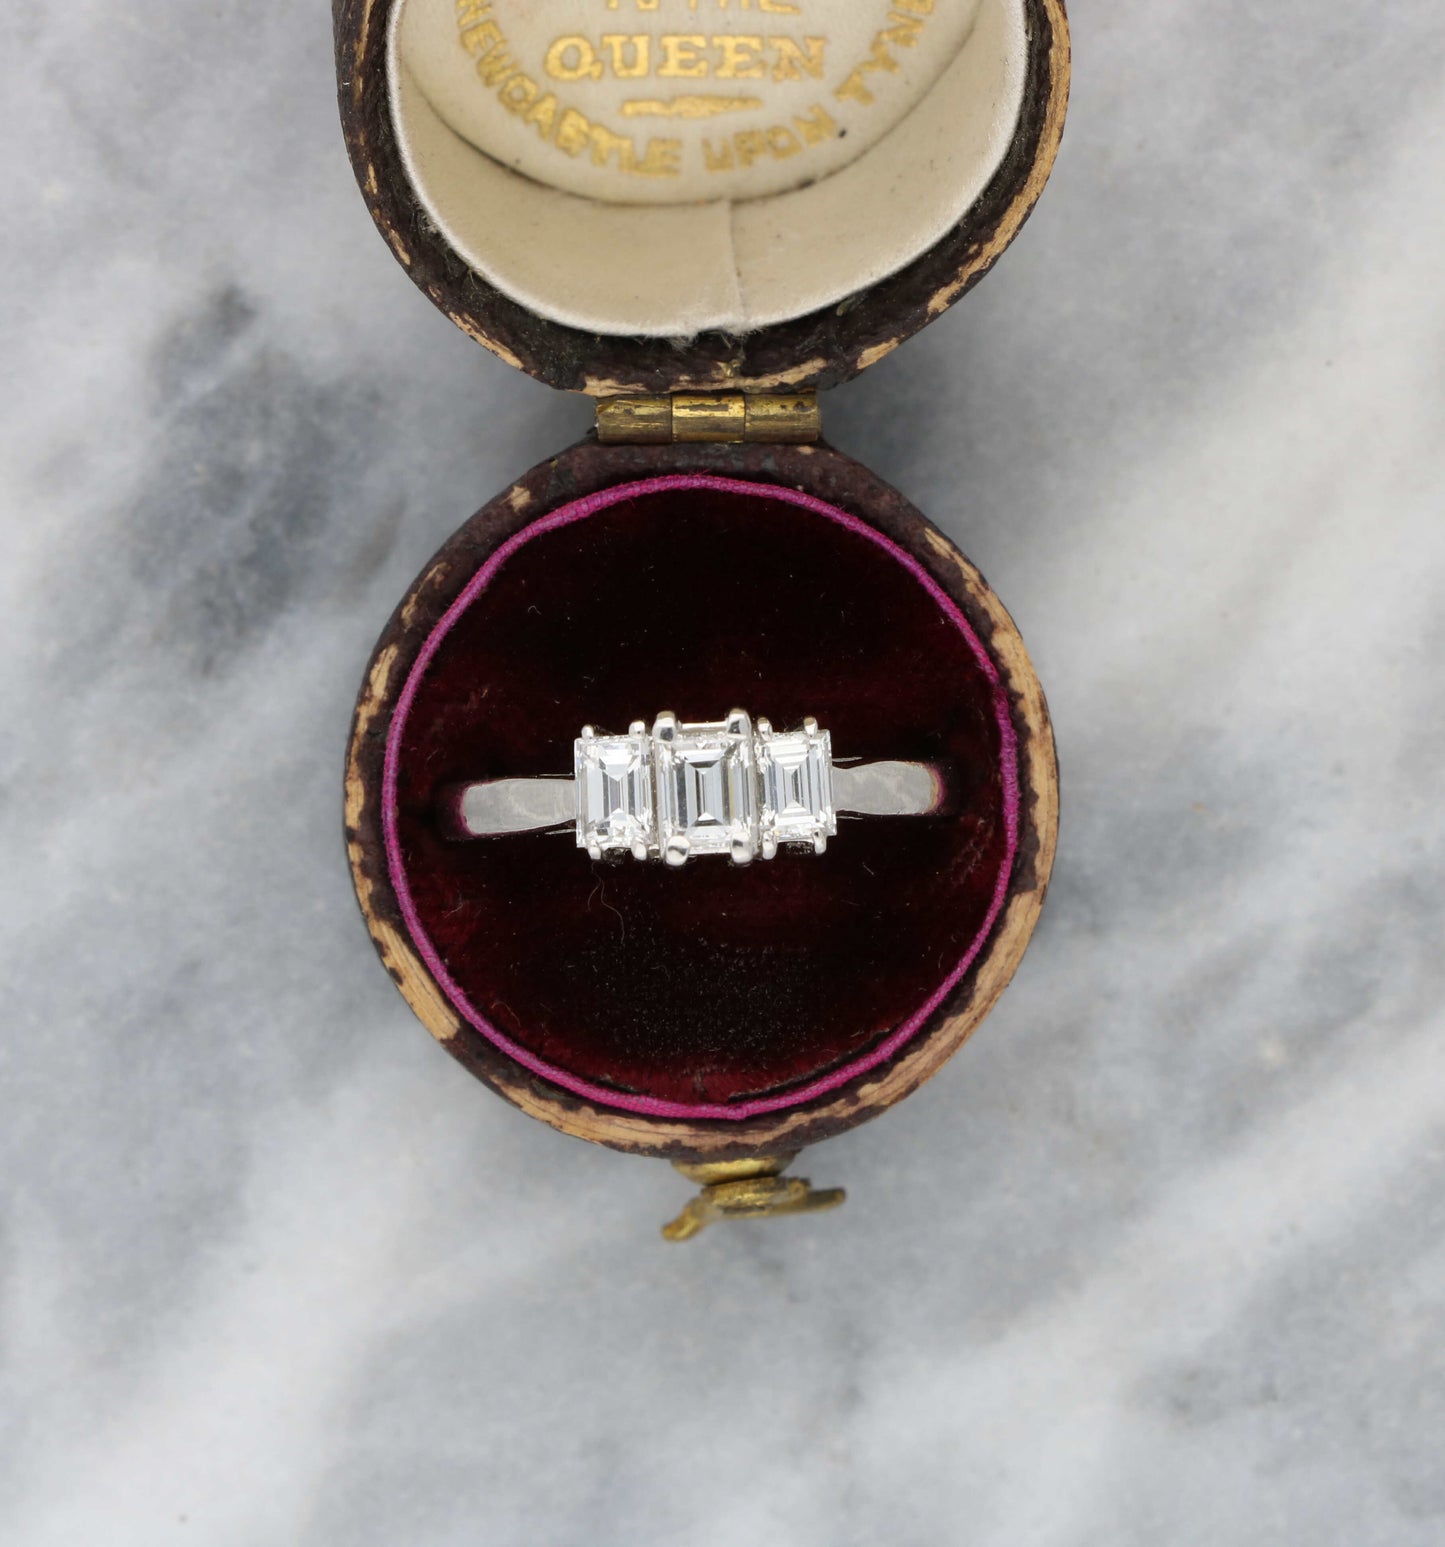 18ct and platinum emerald cut diamond 3 stone engagement ring